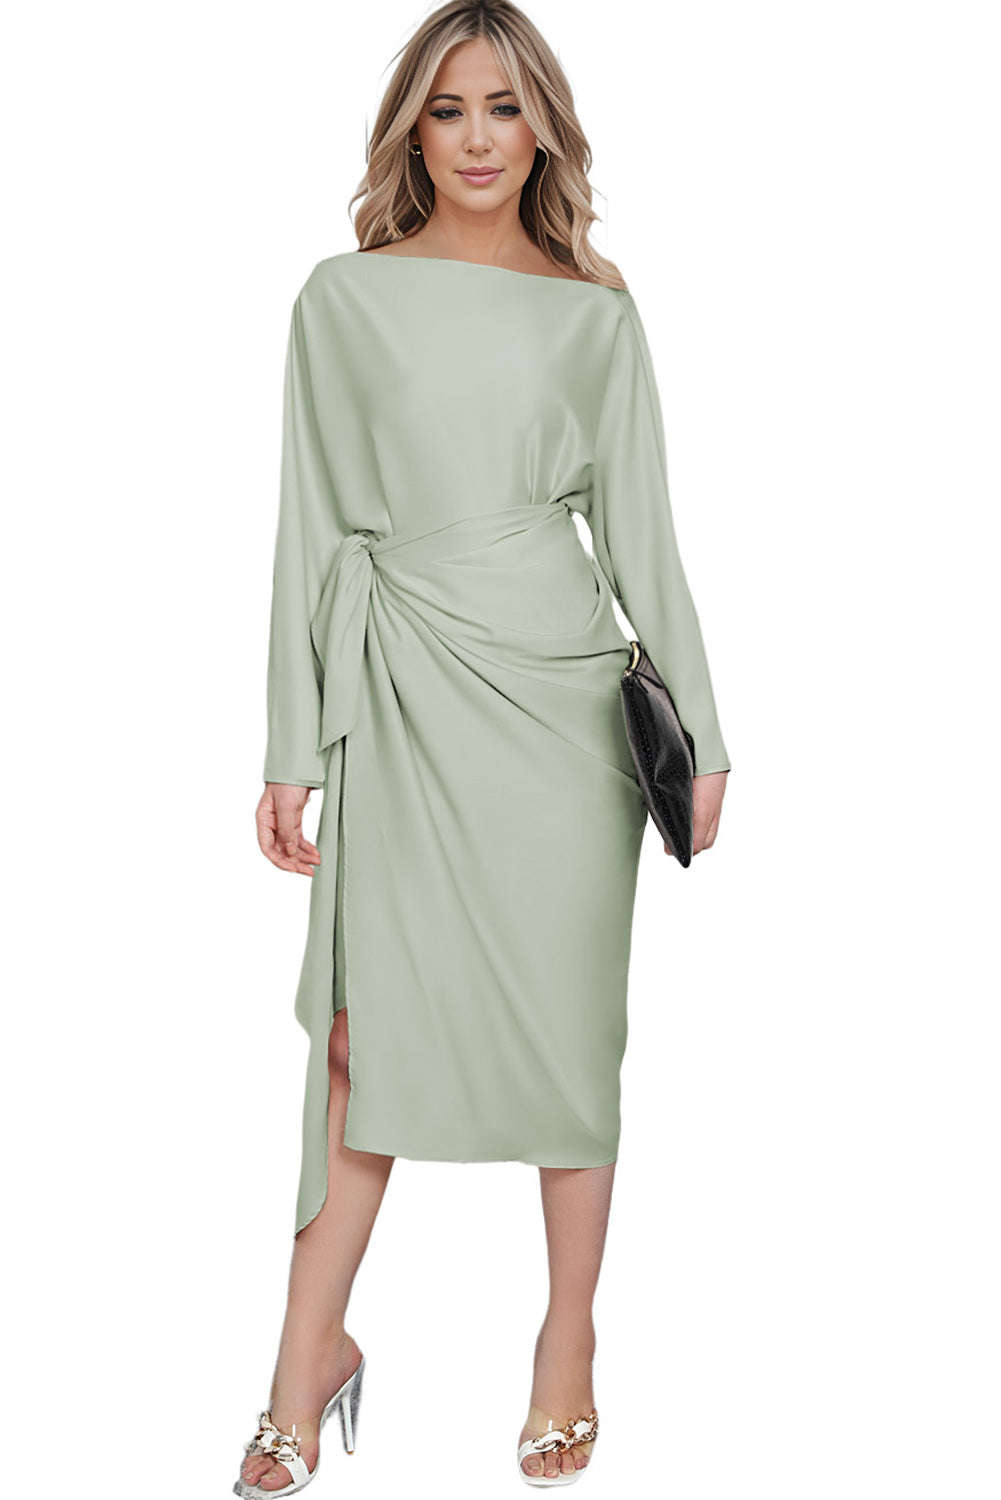 Green Satin Wrap Tie Side Boat Neck Long Sleeve Dress Evening Dresses JT's Designer Fashion